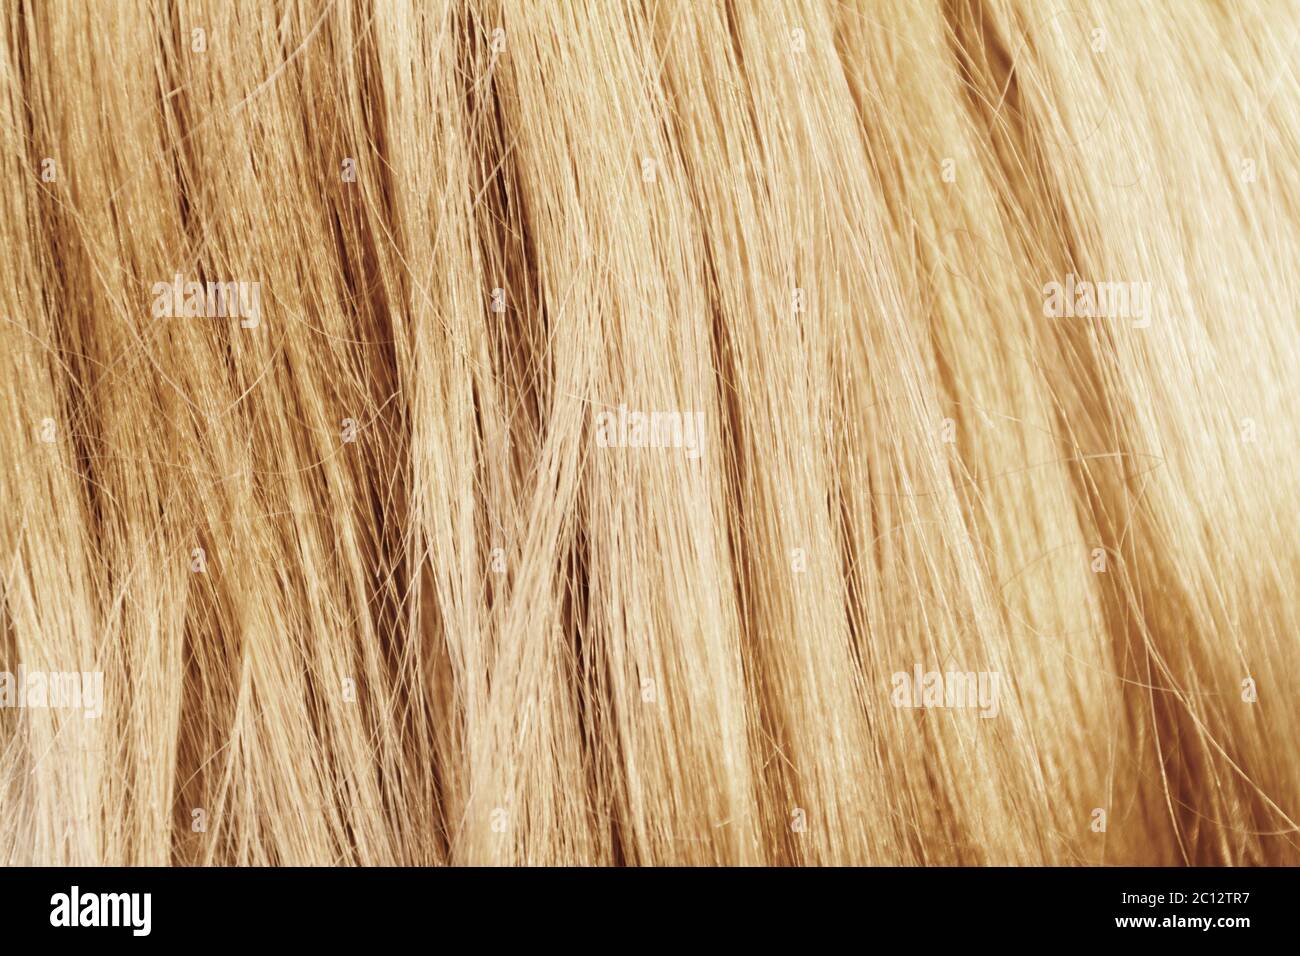 Blonde hair. Blond hair texture - closeup photo Stock Photo